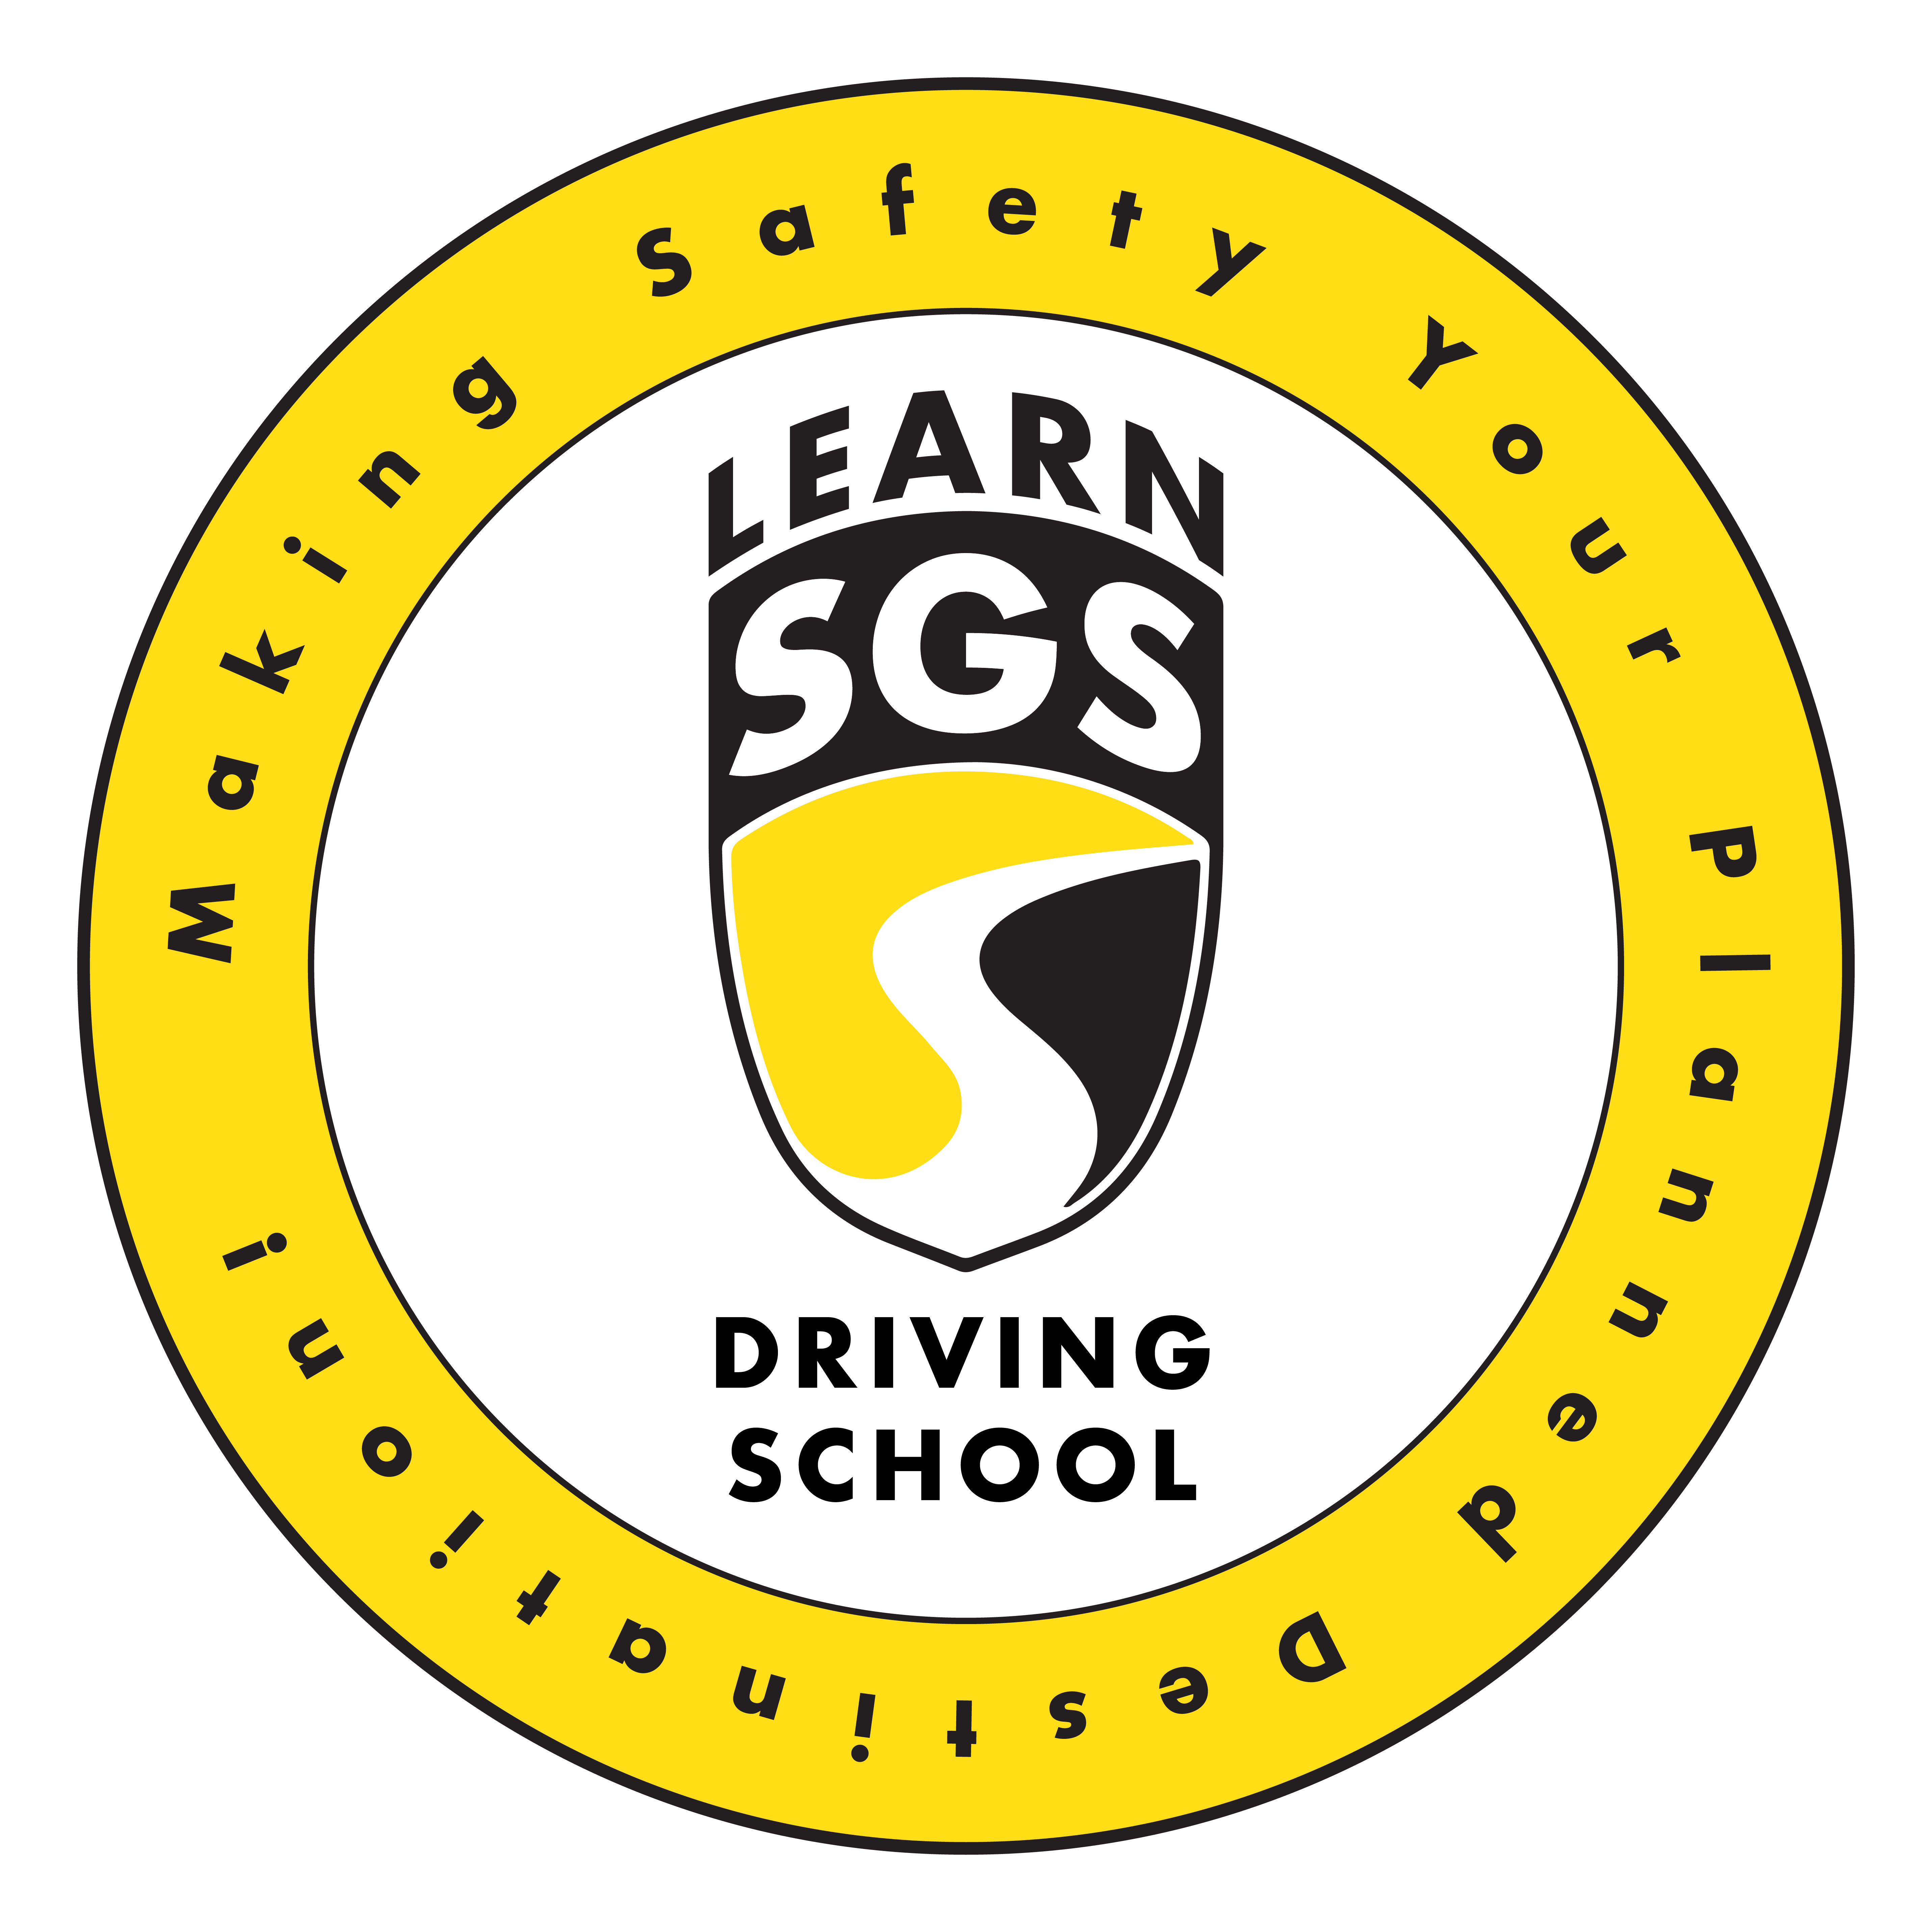 Learnsgs Driving School